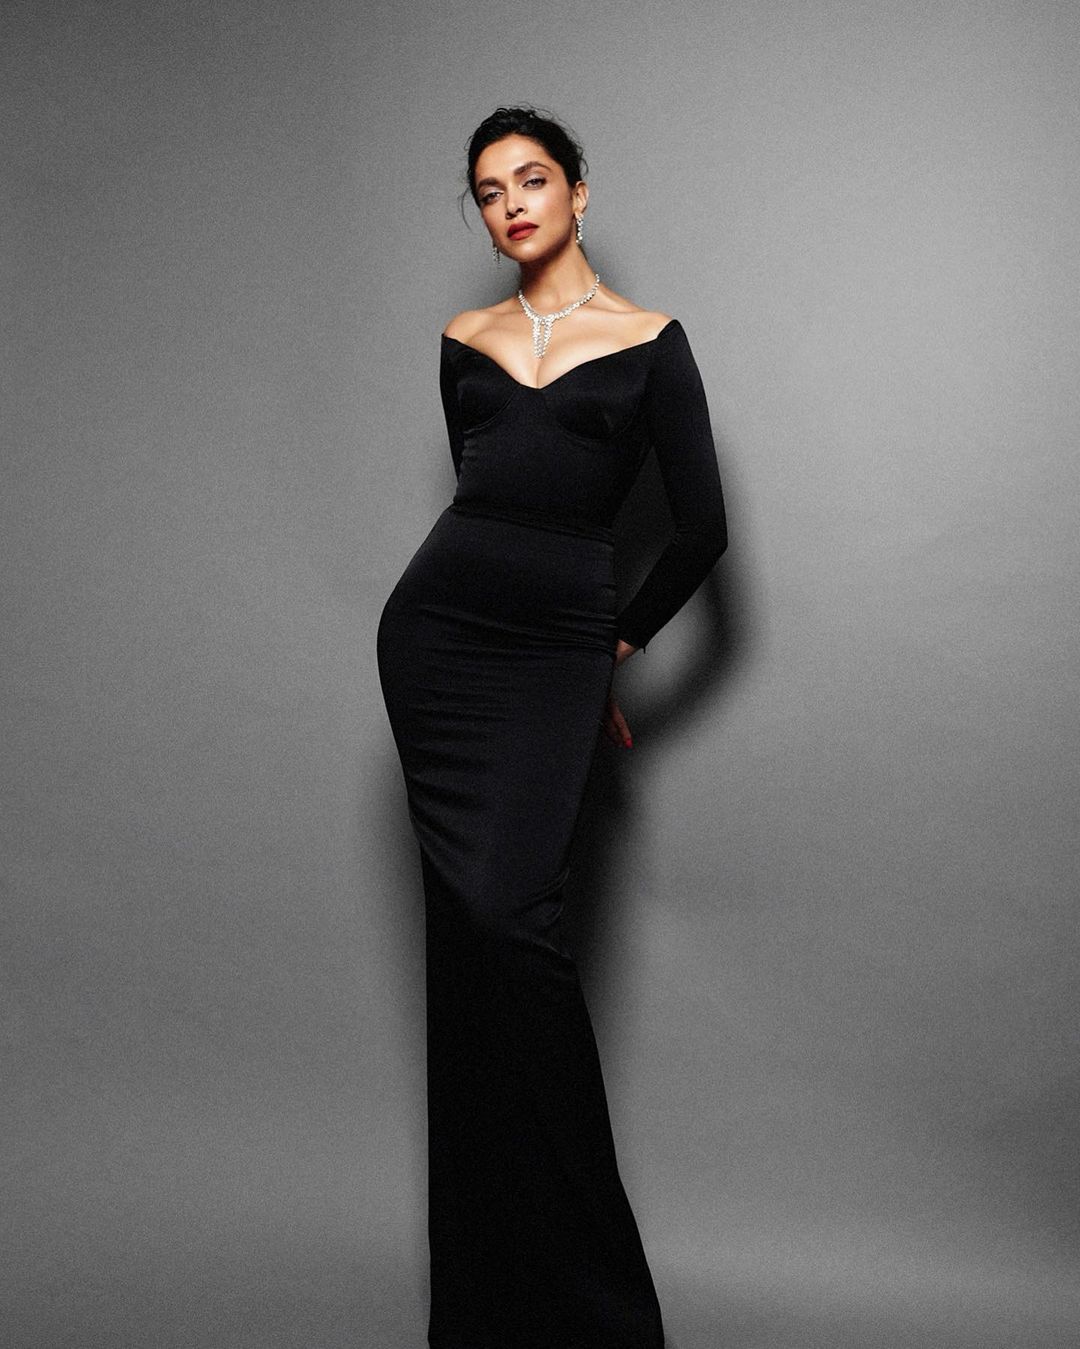 Deepika Padukone At Cannes 2022: The Diva Stuns In Classic Black ...